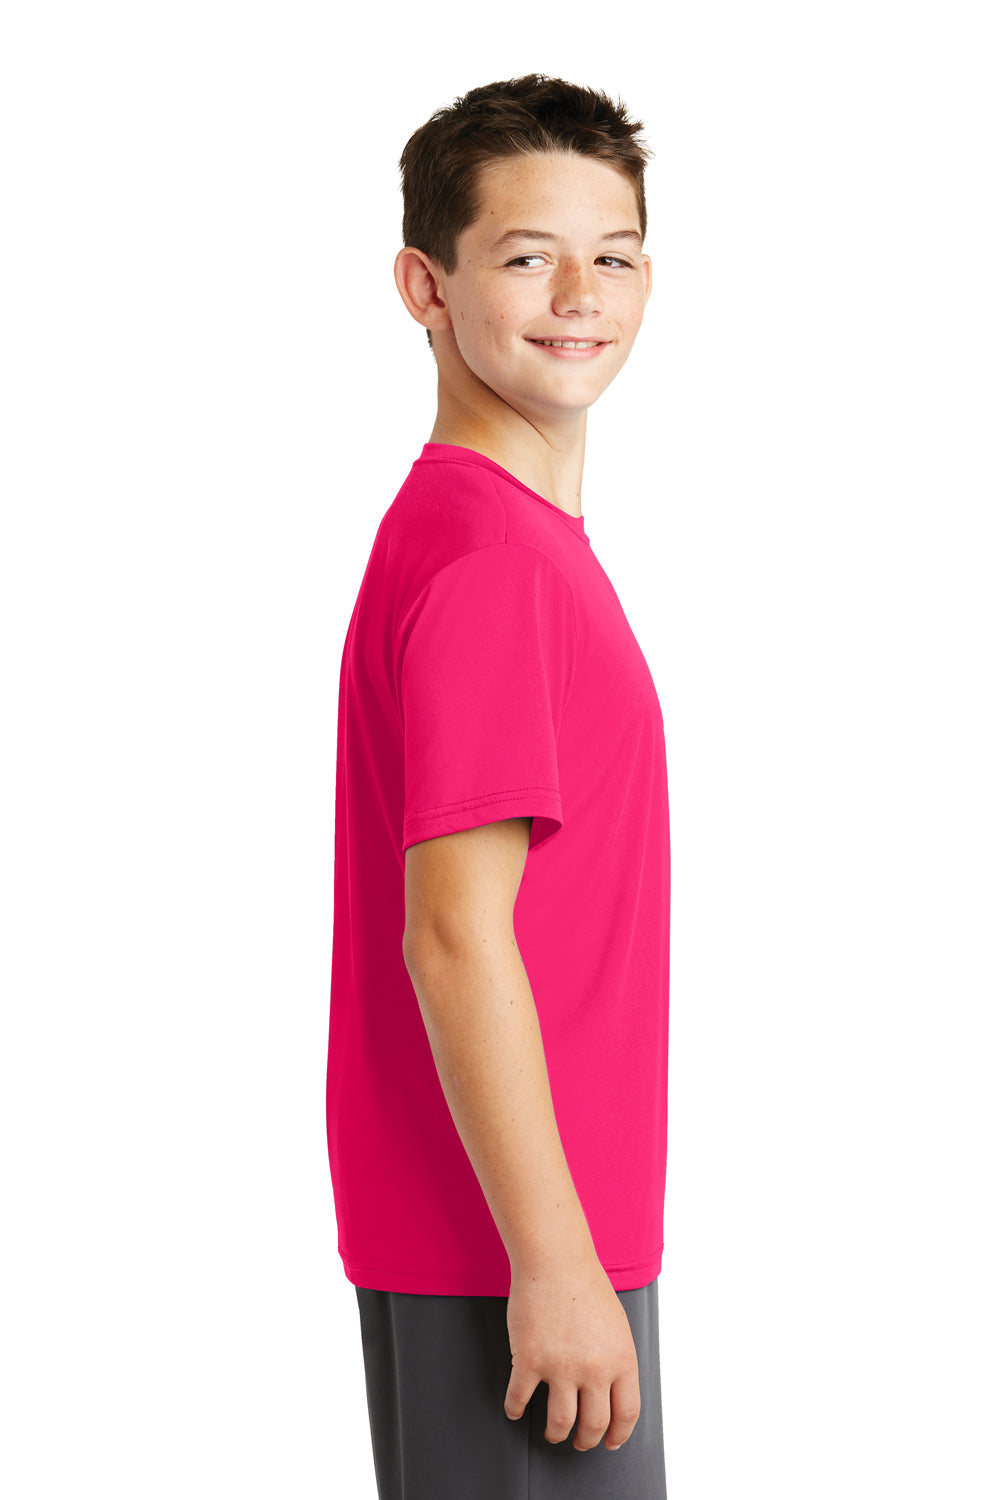 Sport-Tek YST320 Youth Tough Moisture Wicking Short Sleeve Crewneck T-Shirt Fuchsia Pink Side